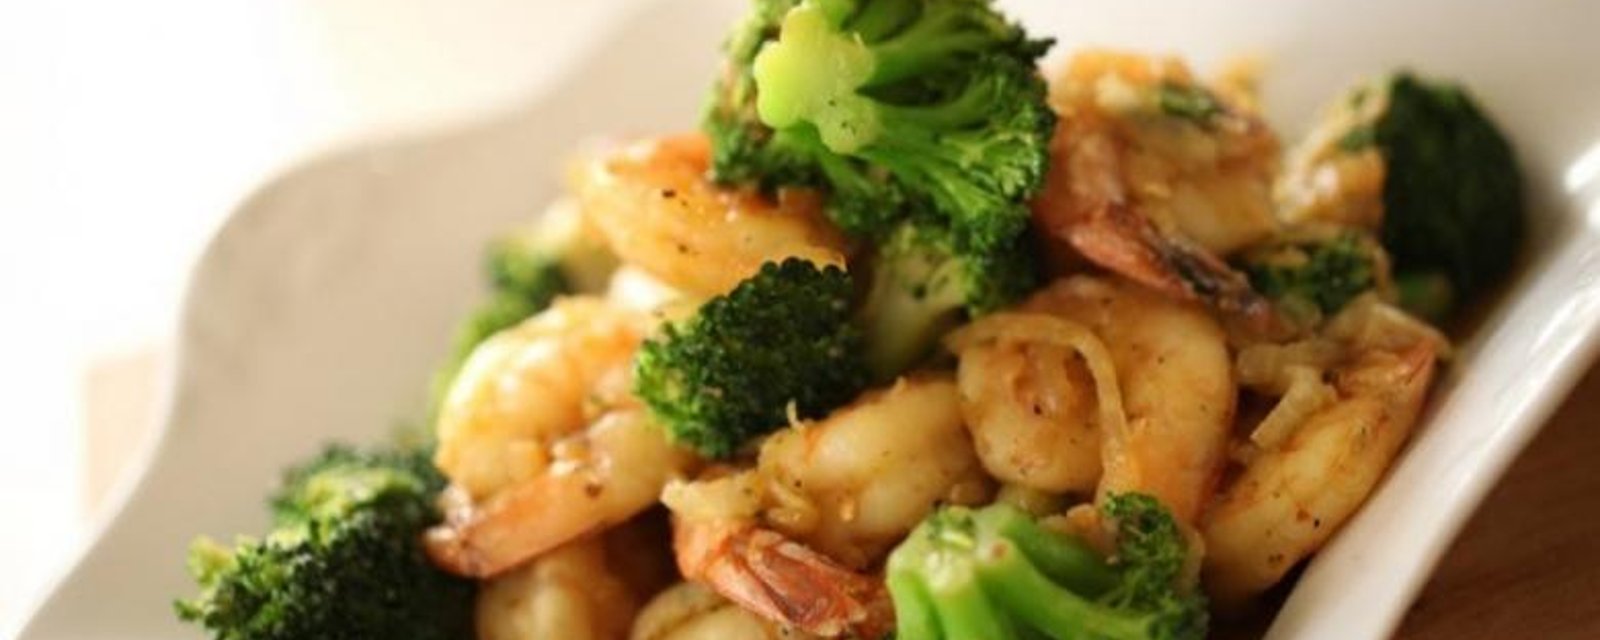 Sauté de crevettes et brocoli dans une savoureuse sauce au sésame facile